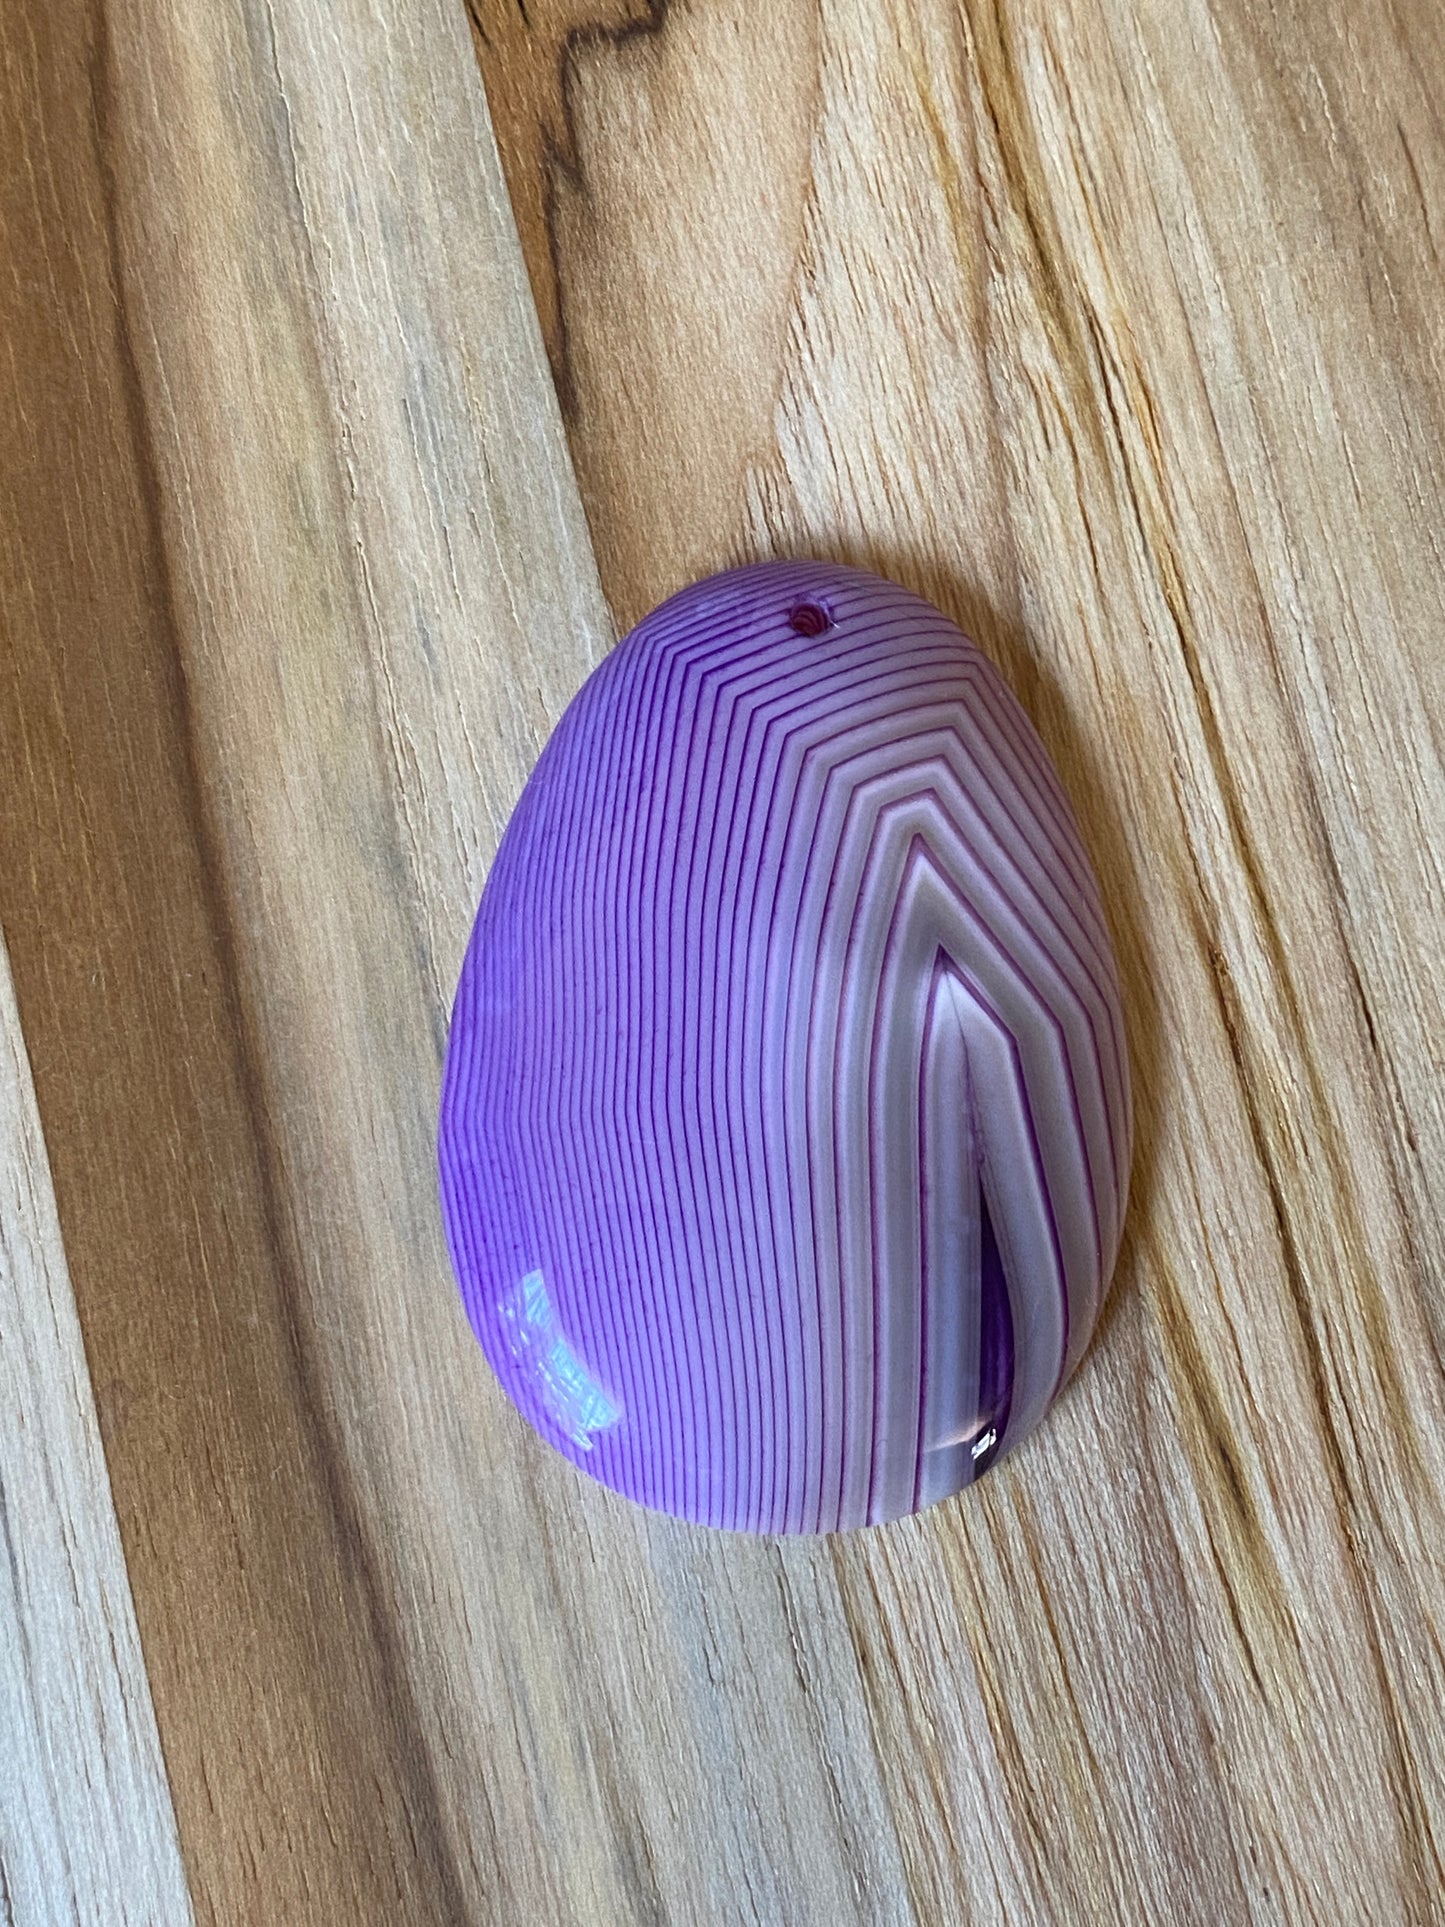 Oval Shaped Agate Pendant Bead Purple